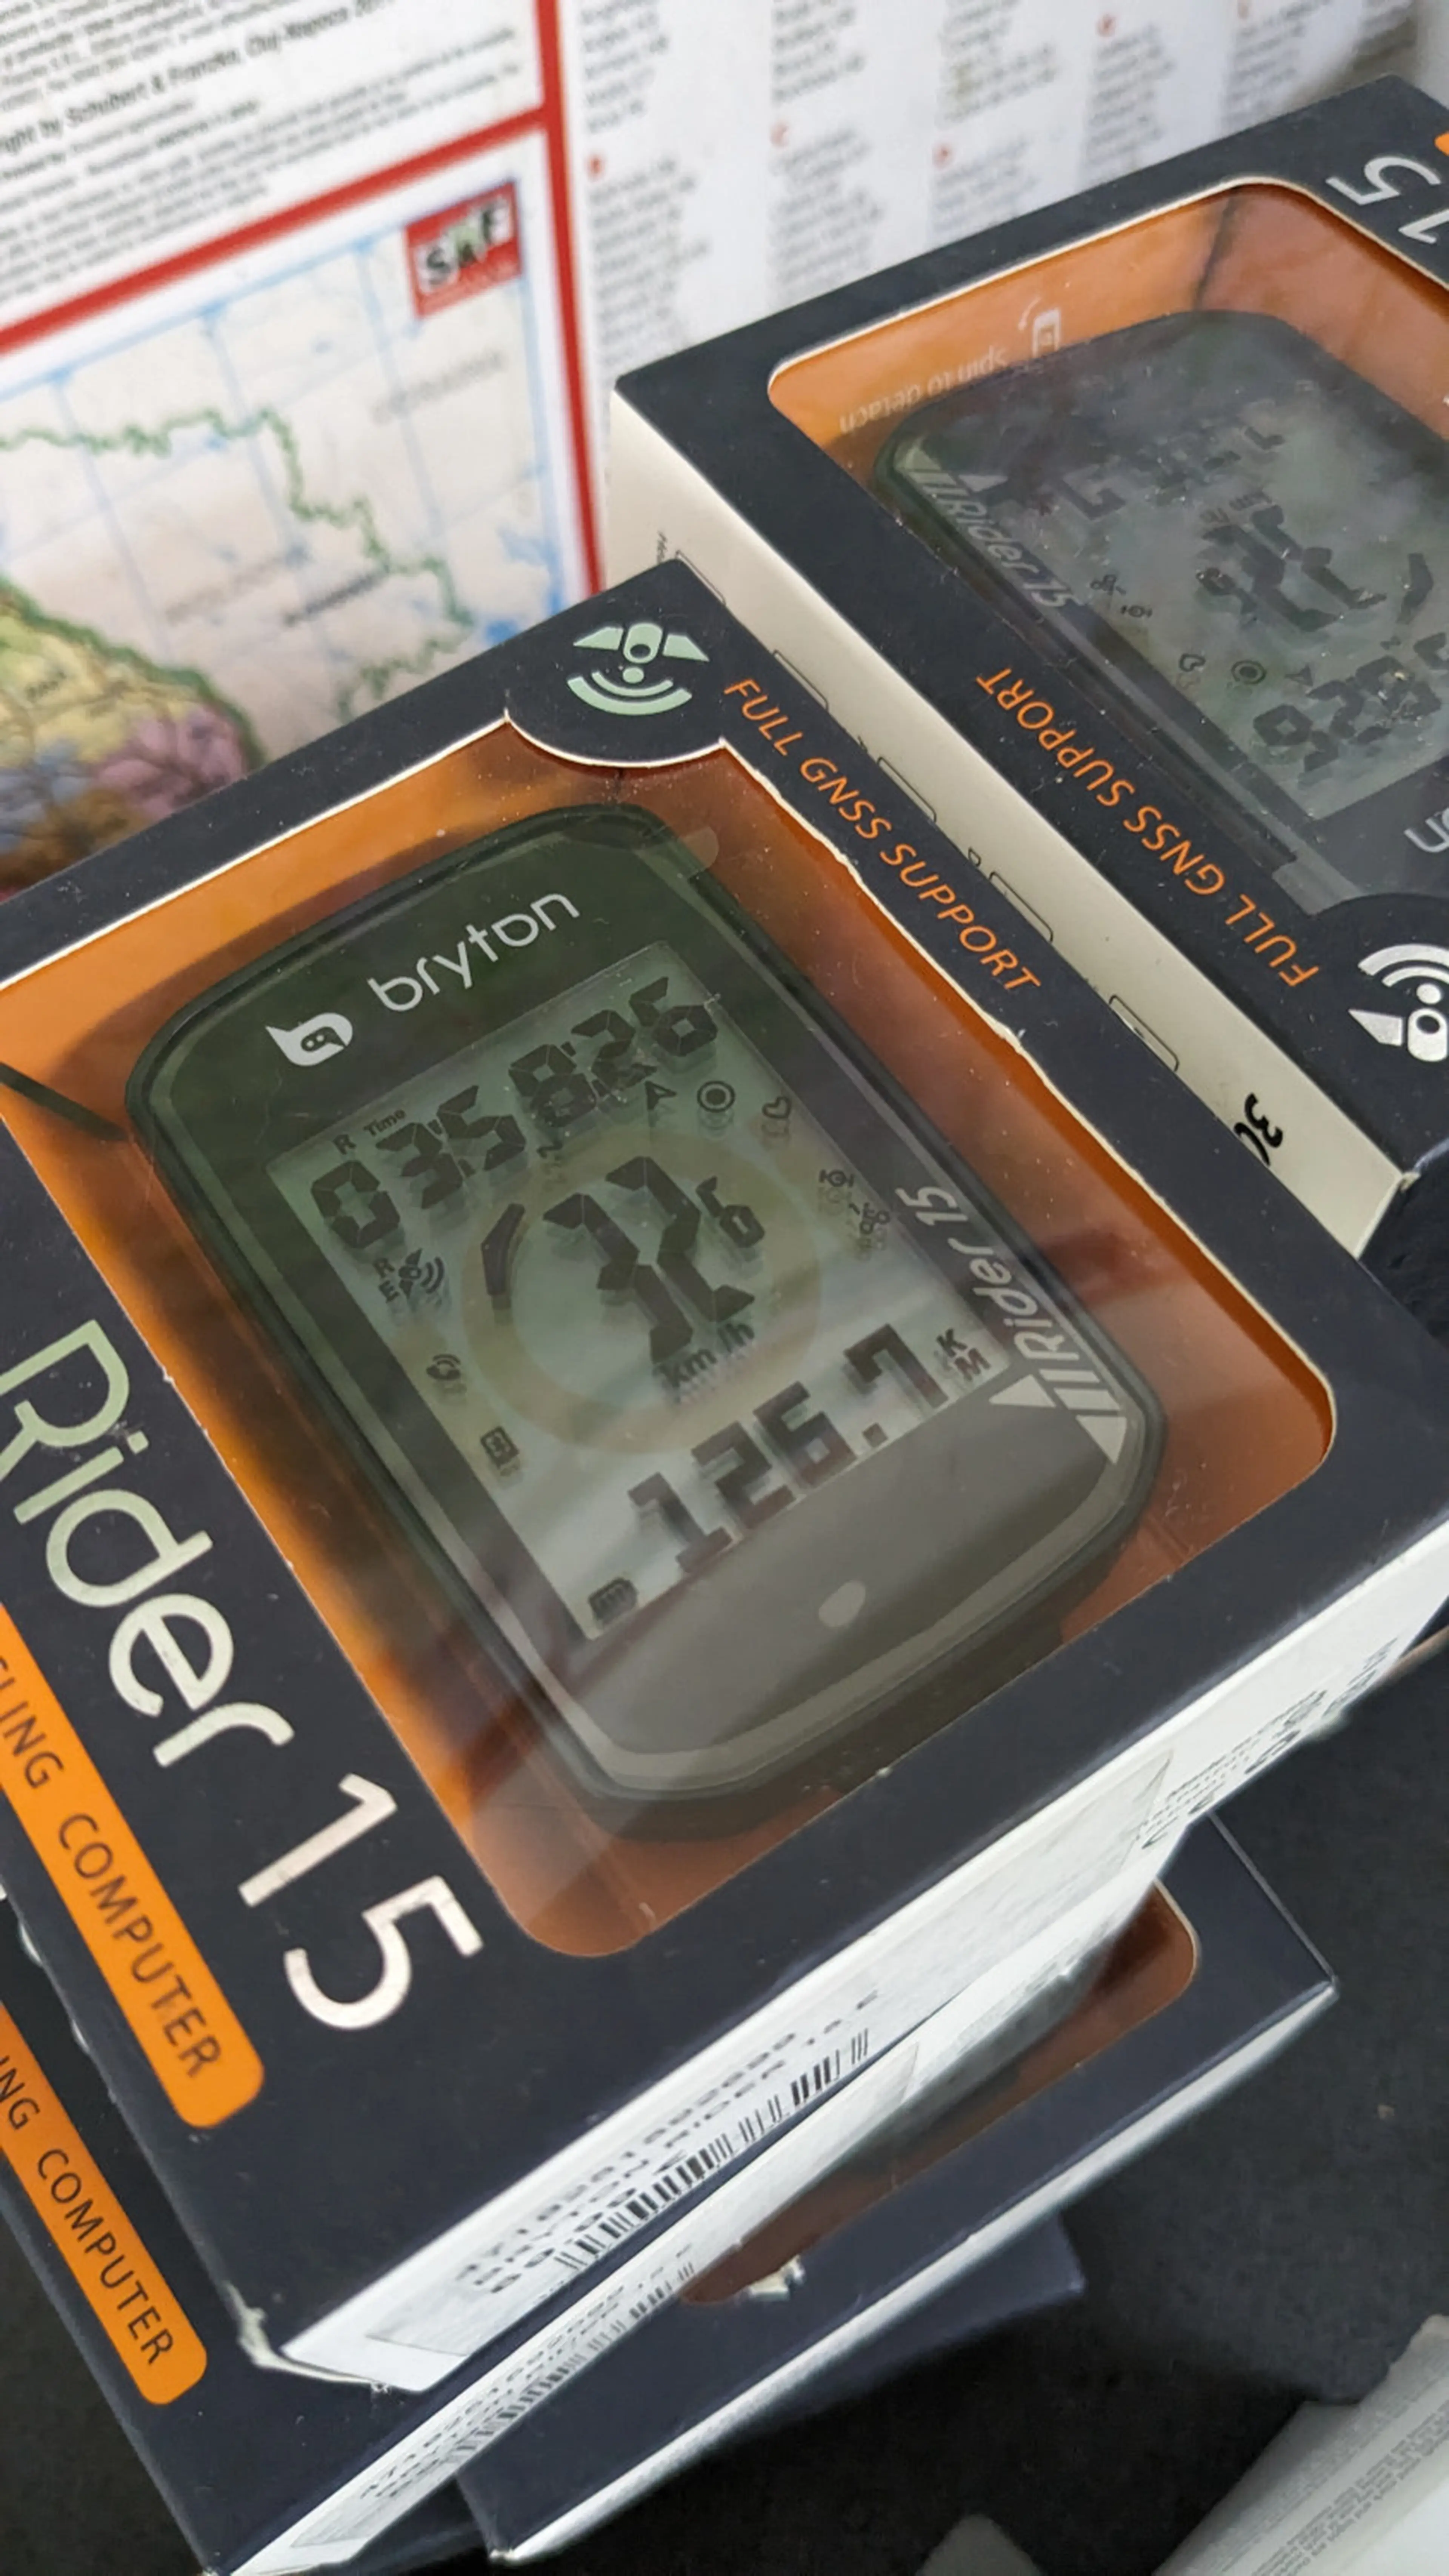 1. GPS Bryton 15